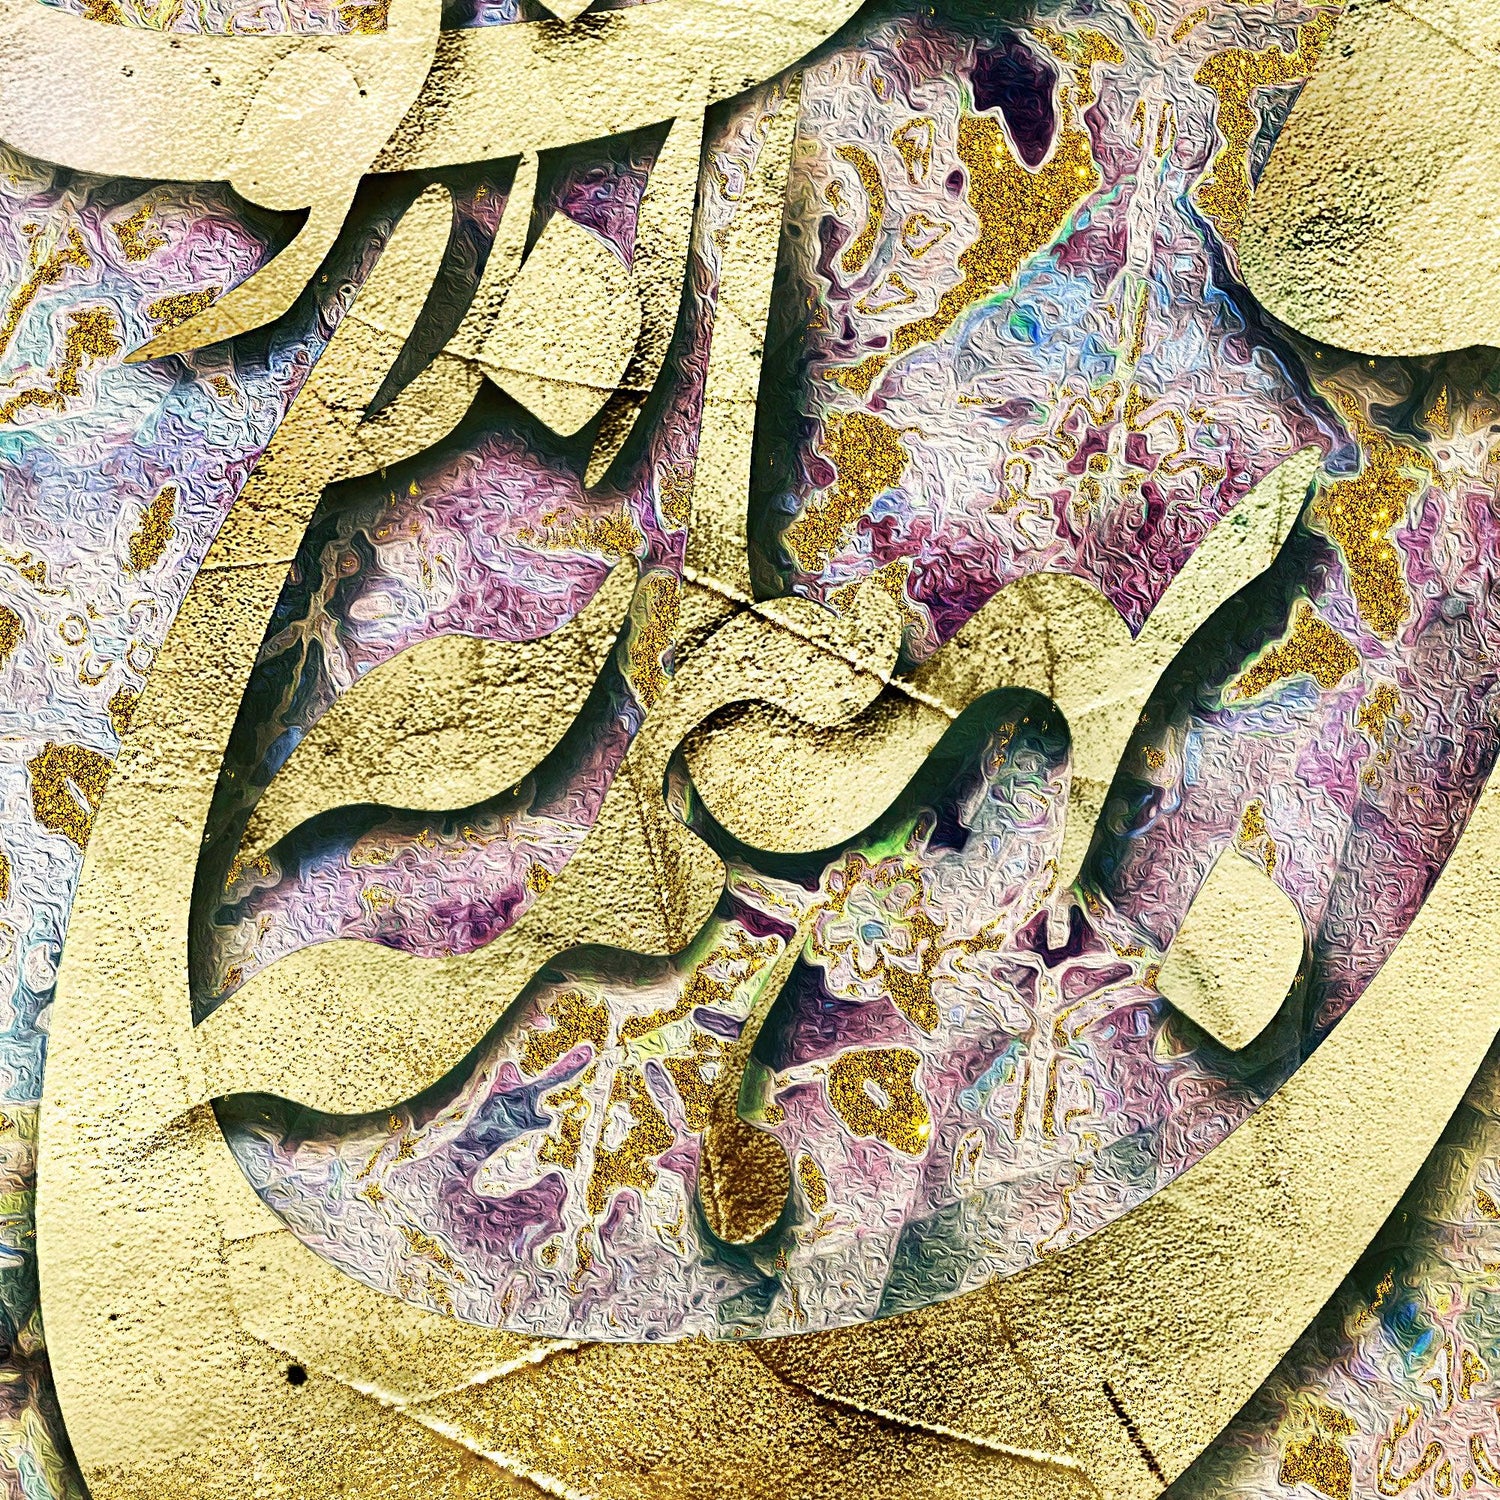 Ey Eshgh - 3 Piece | Persian Wall Art | Persian Home Wall Decor - ORIAVI Persian Art, persian artwork for sale, persian calligraphy, persian calligraphy wall art, persian mix media wall art, persian painting, persian wall art